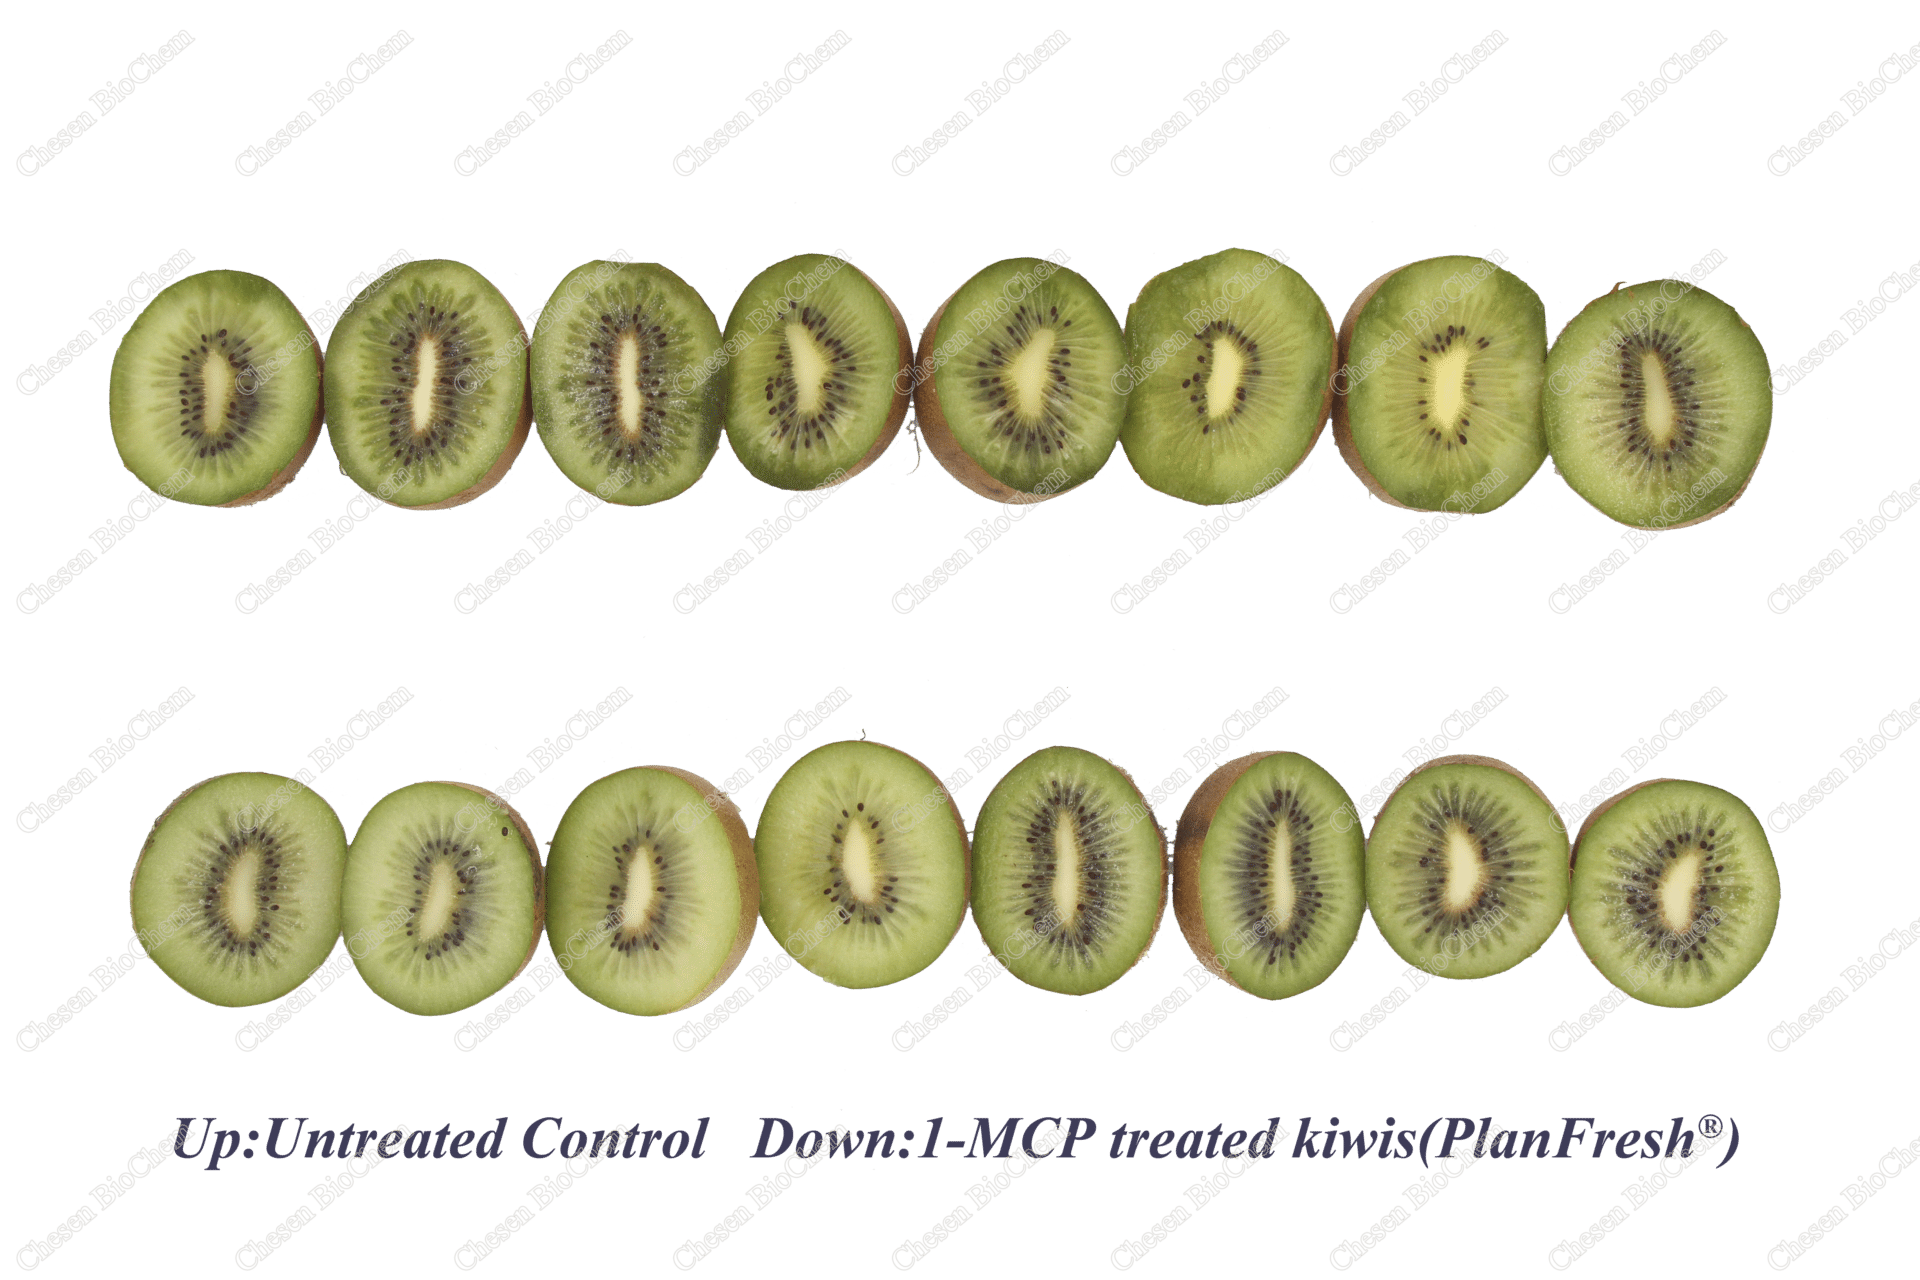 of Kiwifruit Extends of Shelf Application 1-MCP Life Postharvest